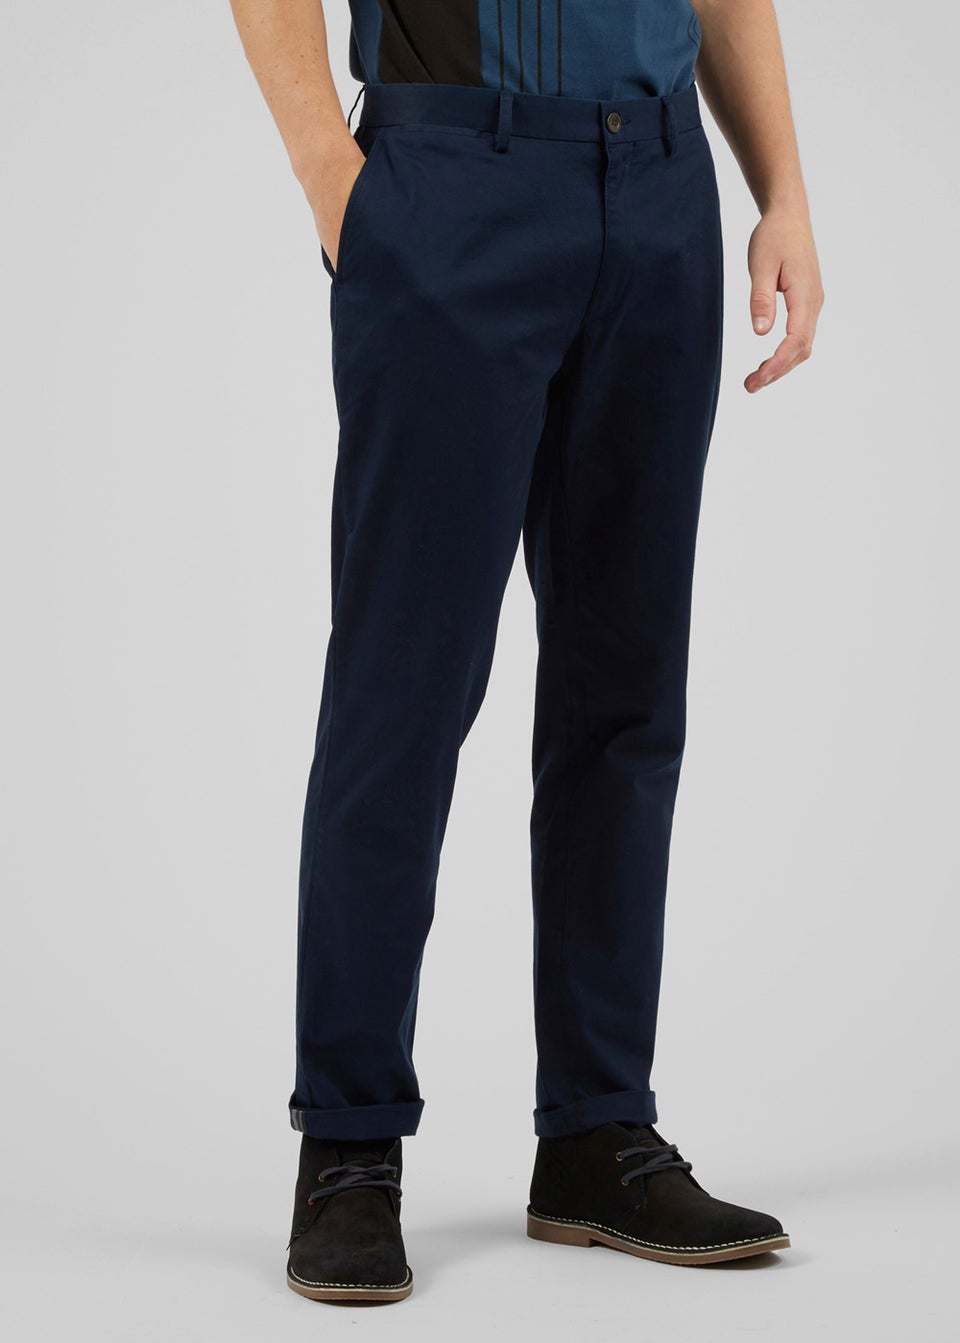 Buy Ben Sherman Mens Khaki Pants  Comfort Stretch Slim Fit Chinos Size  33X32 Sand at Amazonin